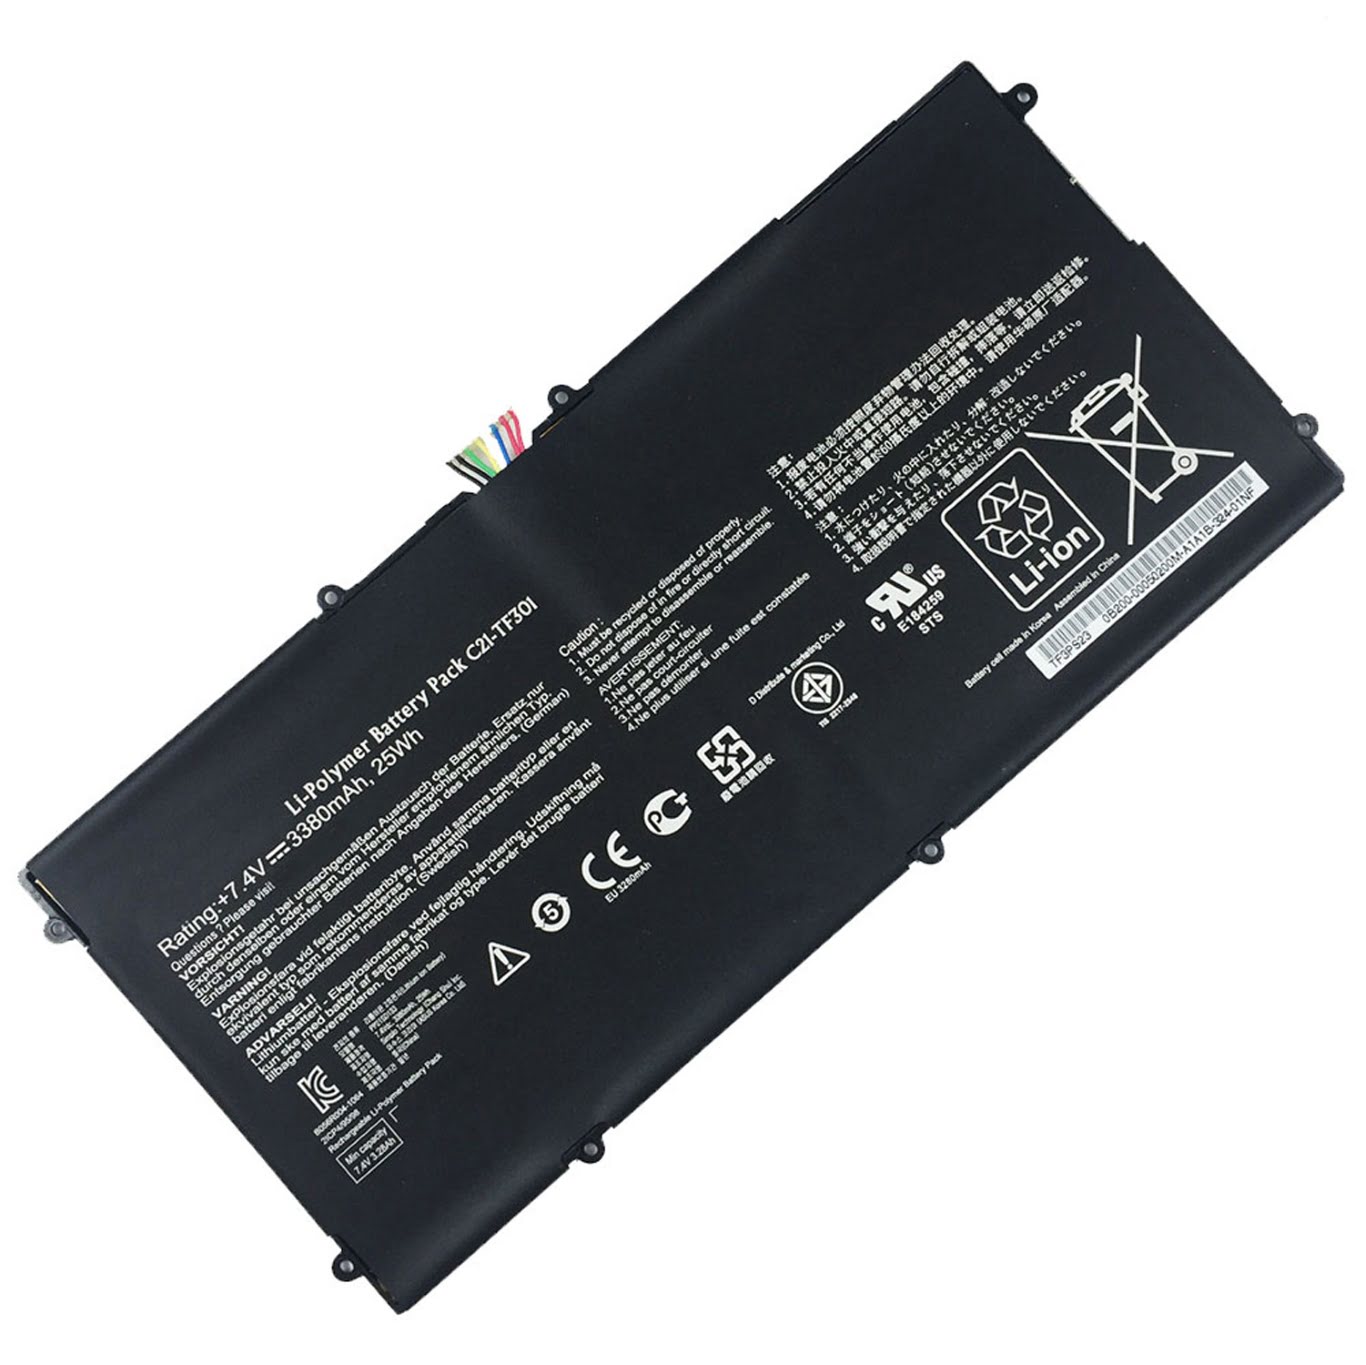 C21-TF301 ersatz Laptop Akku fuer Asus Tranformer TF700, Transformer Pad Series, 3380mah / 25wh, 7,4V